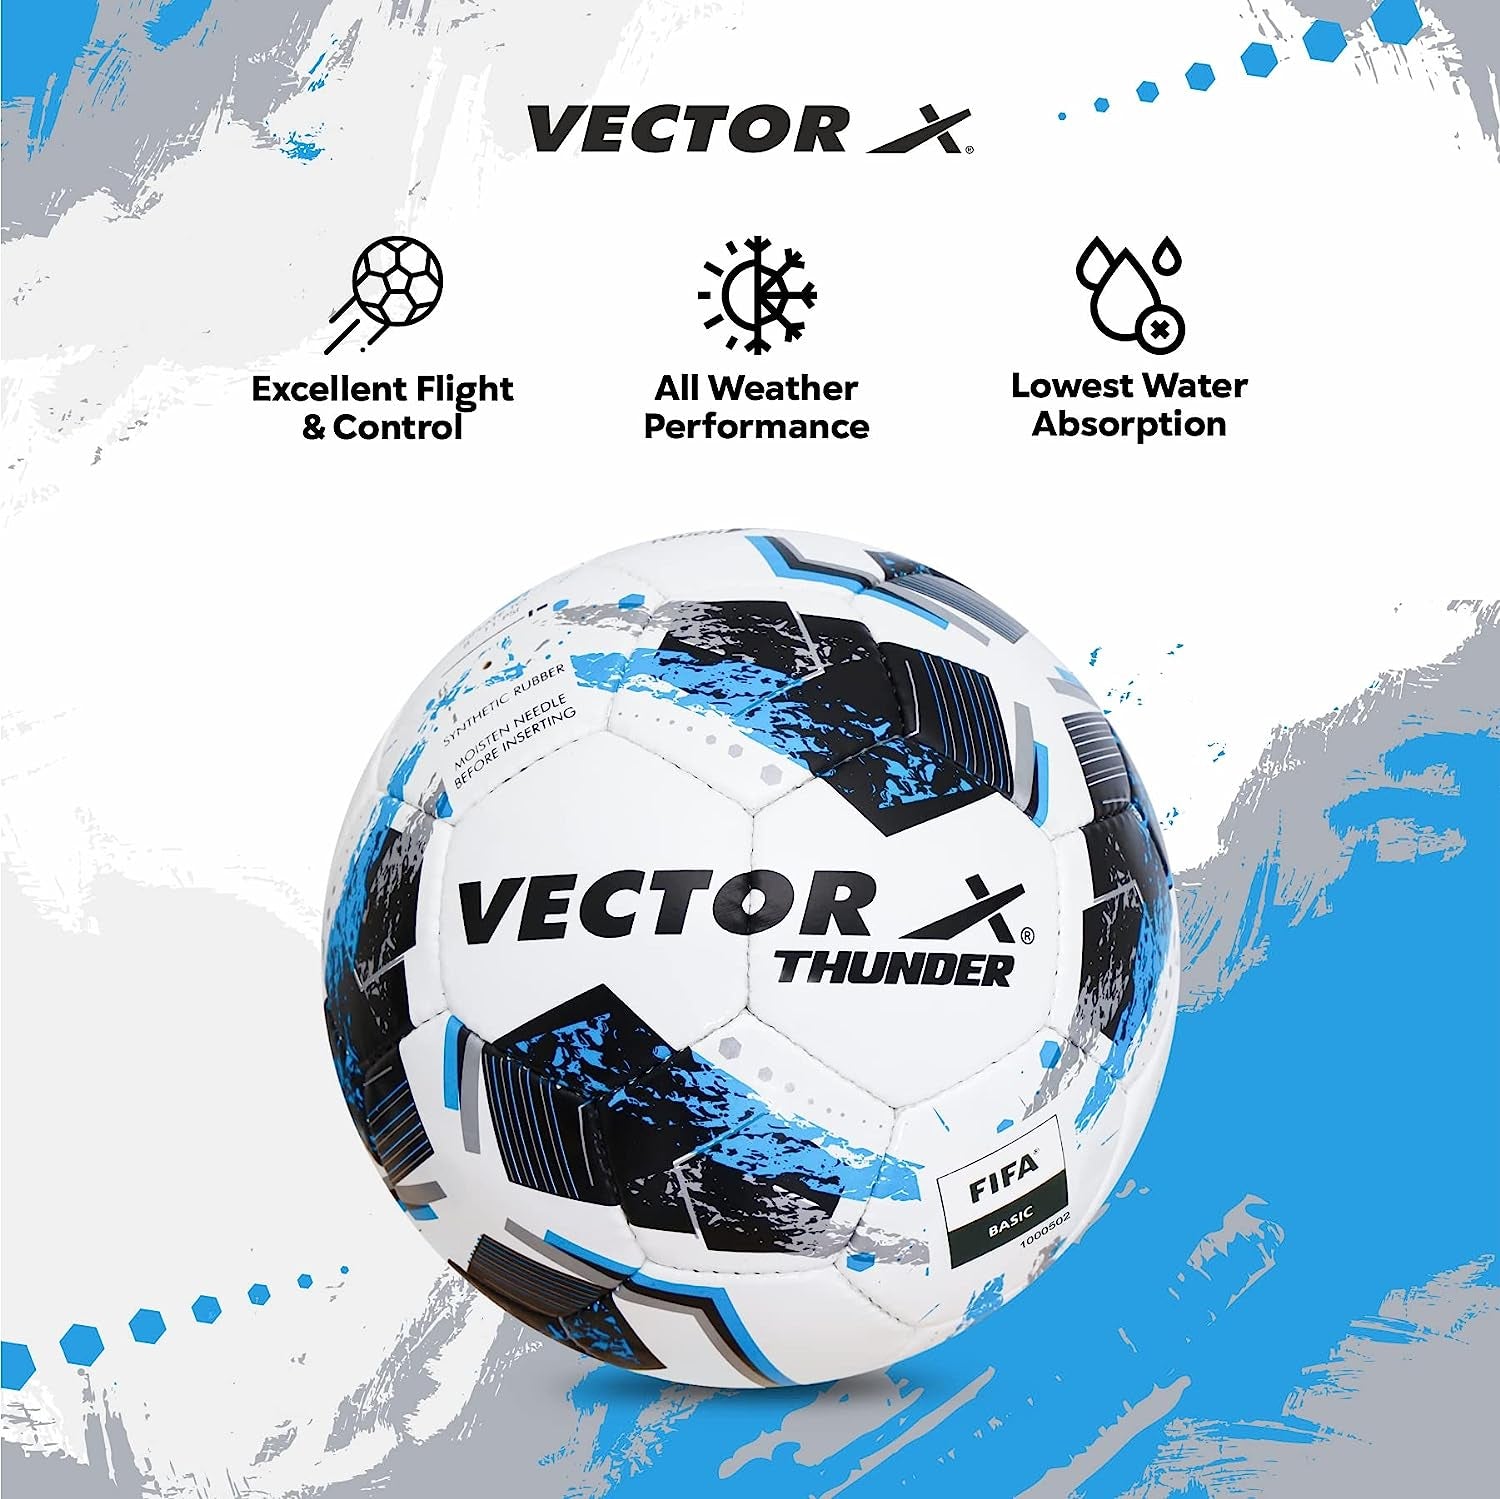 Vector X Thunder Football, Grey/Blue/Black - Size 5 - Best Price online Prokicksports.com